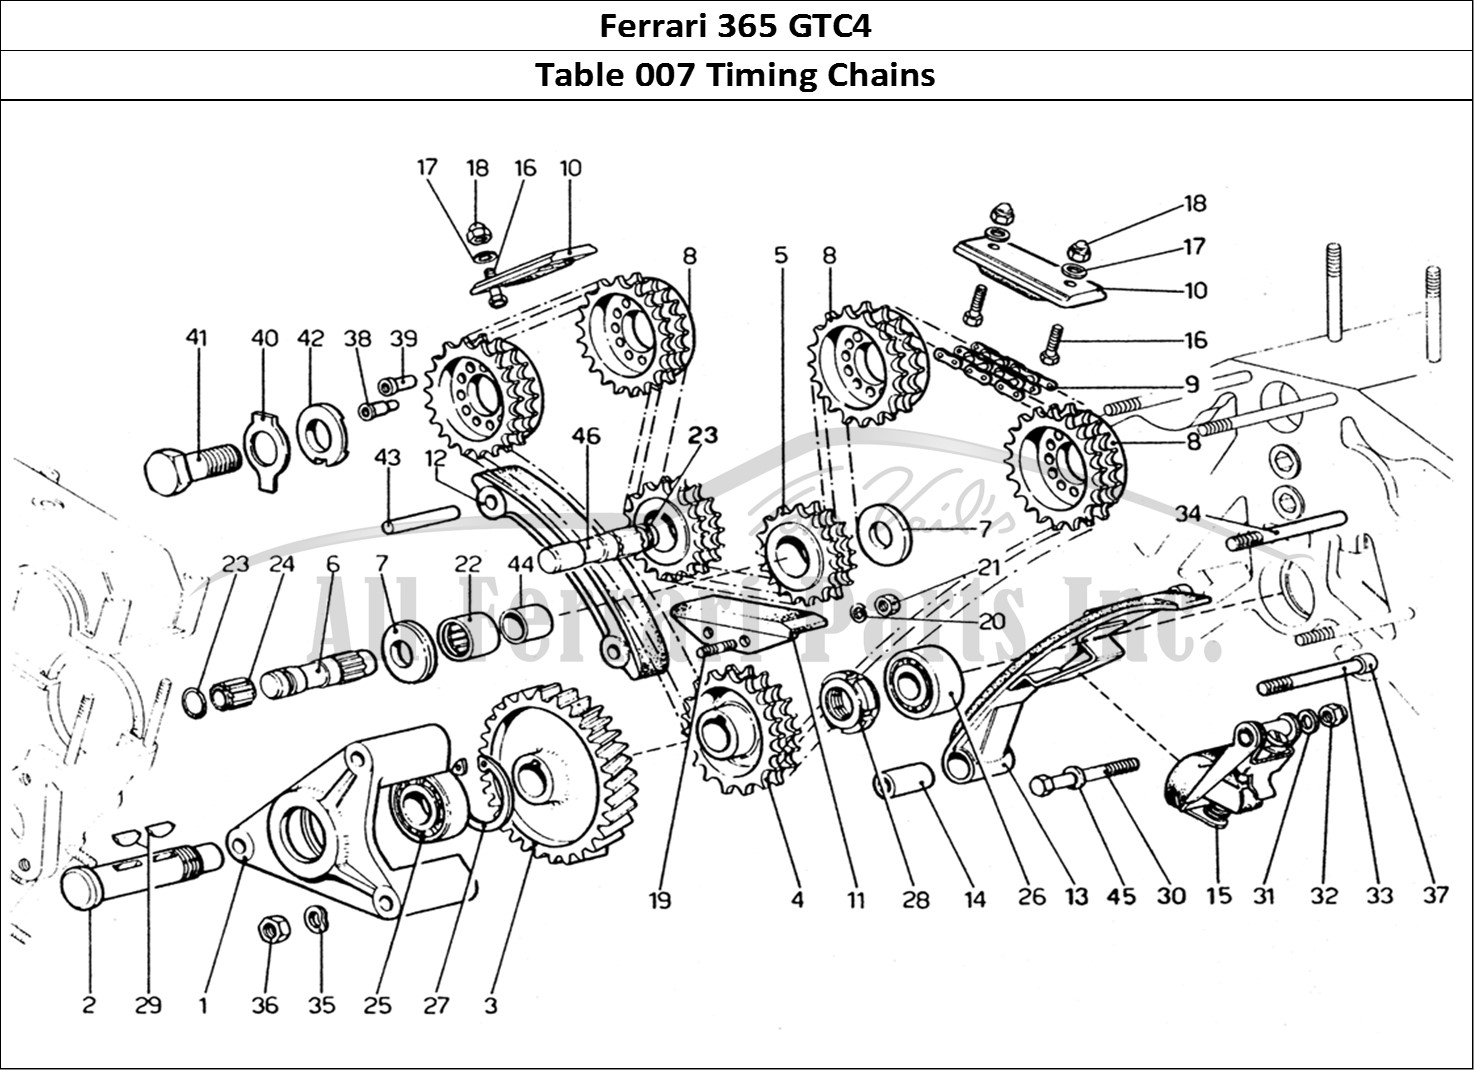 Ferrari Parts Ferrari 365 GTC4 (Mechanical) Page 007 Timing chains